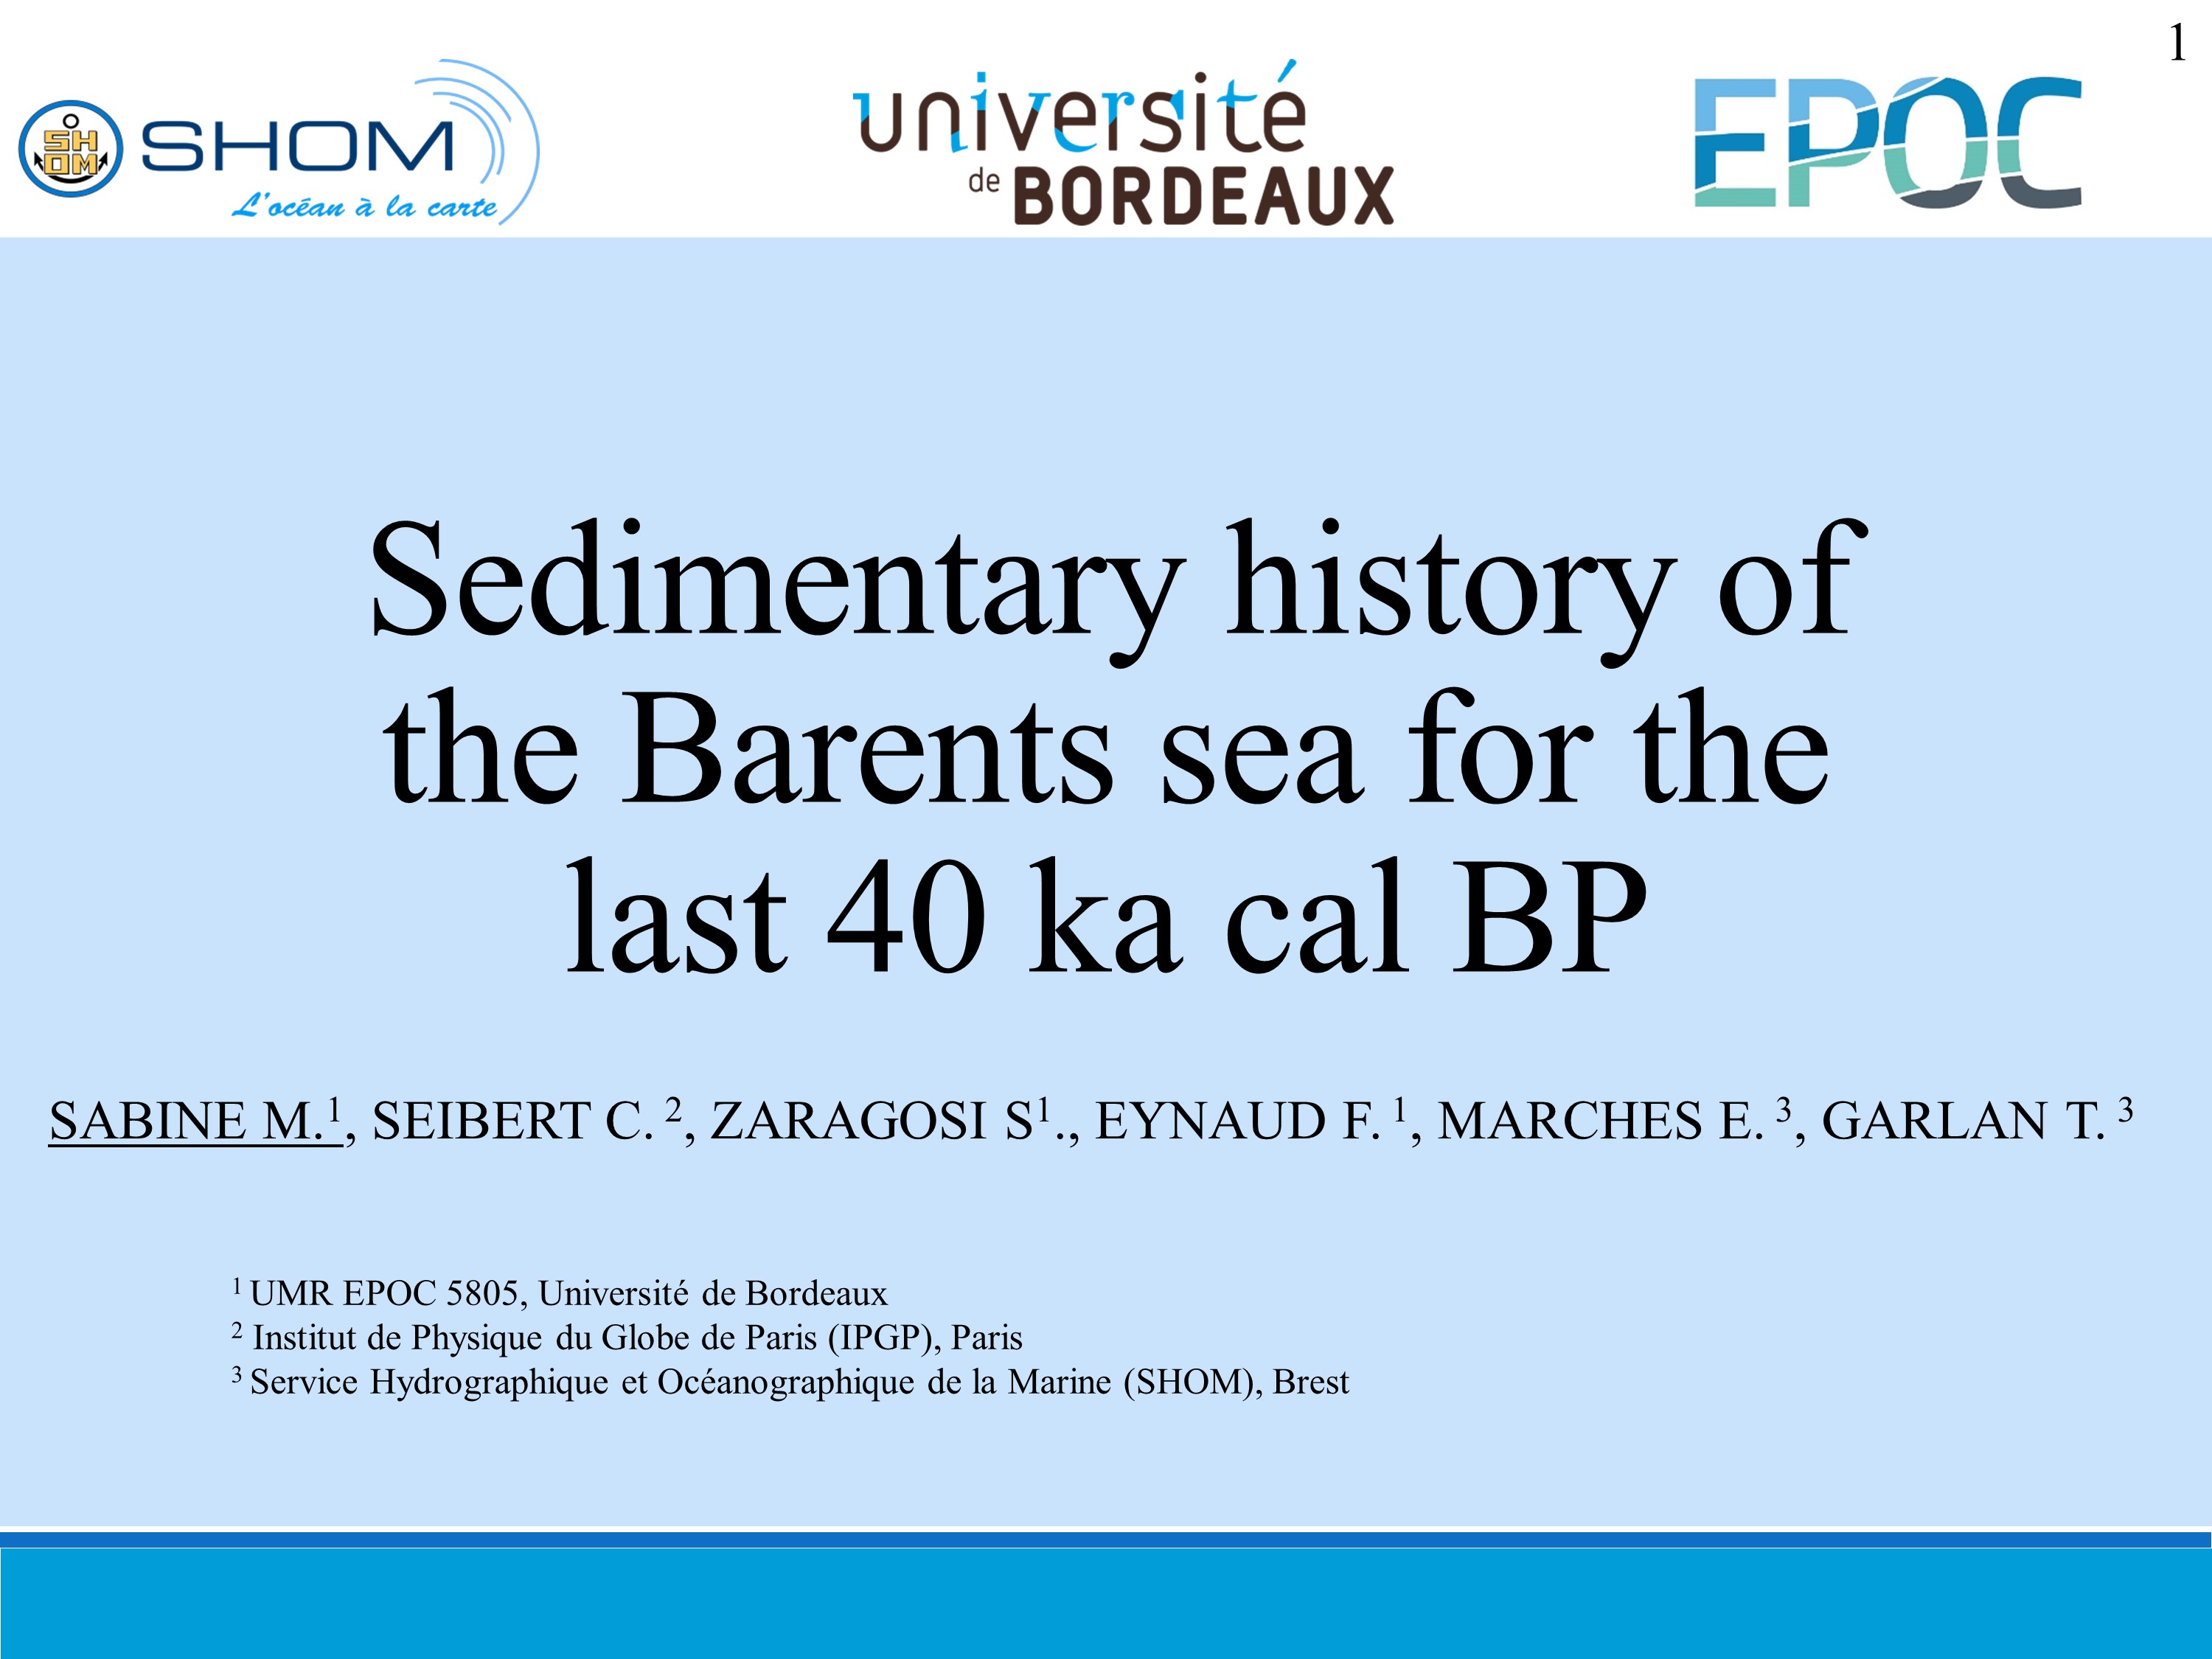 Sedimentary history of the barents sea for the last 40 ka BP Sabine, Seibert et al